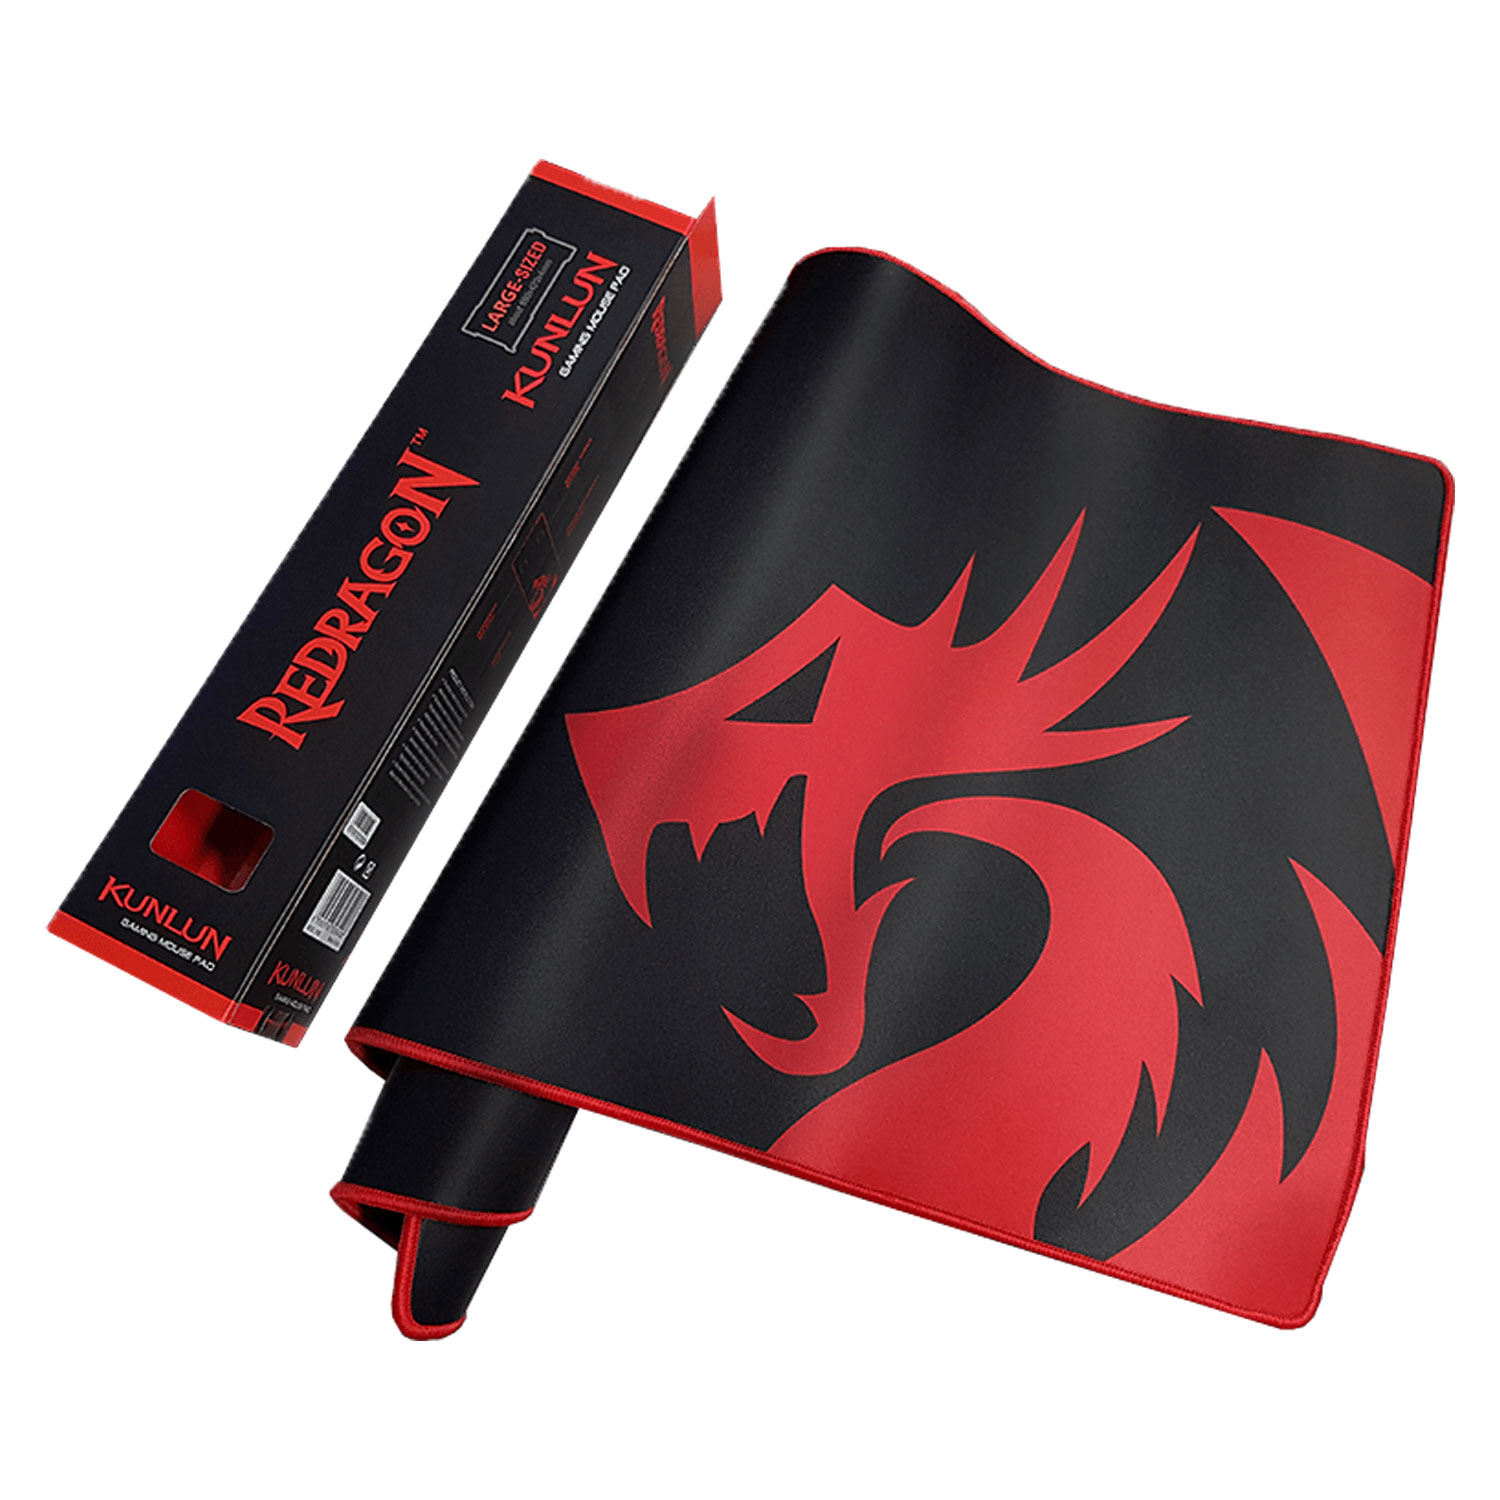 Mousepad Gamer Redragon Kunlun P006 Large - Preto e vermelho